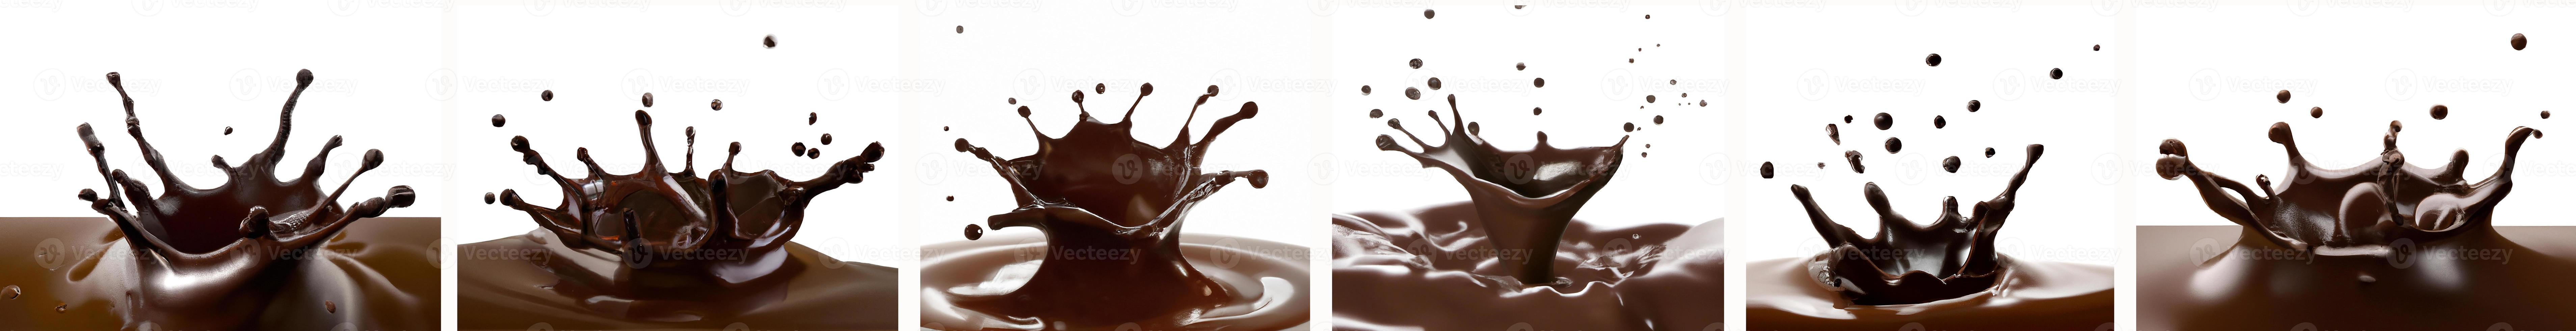 Chocolate, cocoa and coffee splashes. photo